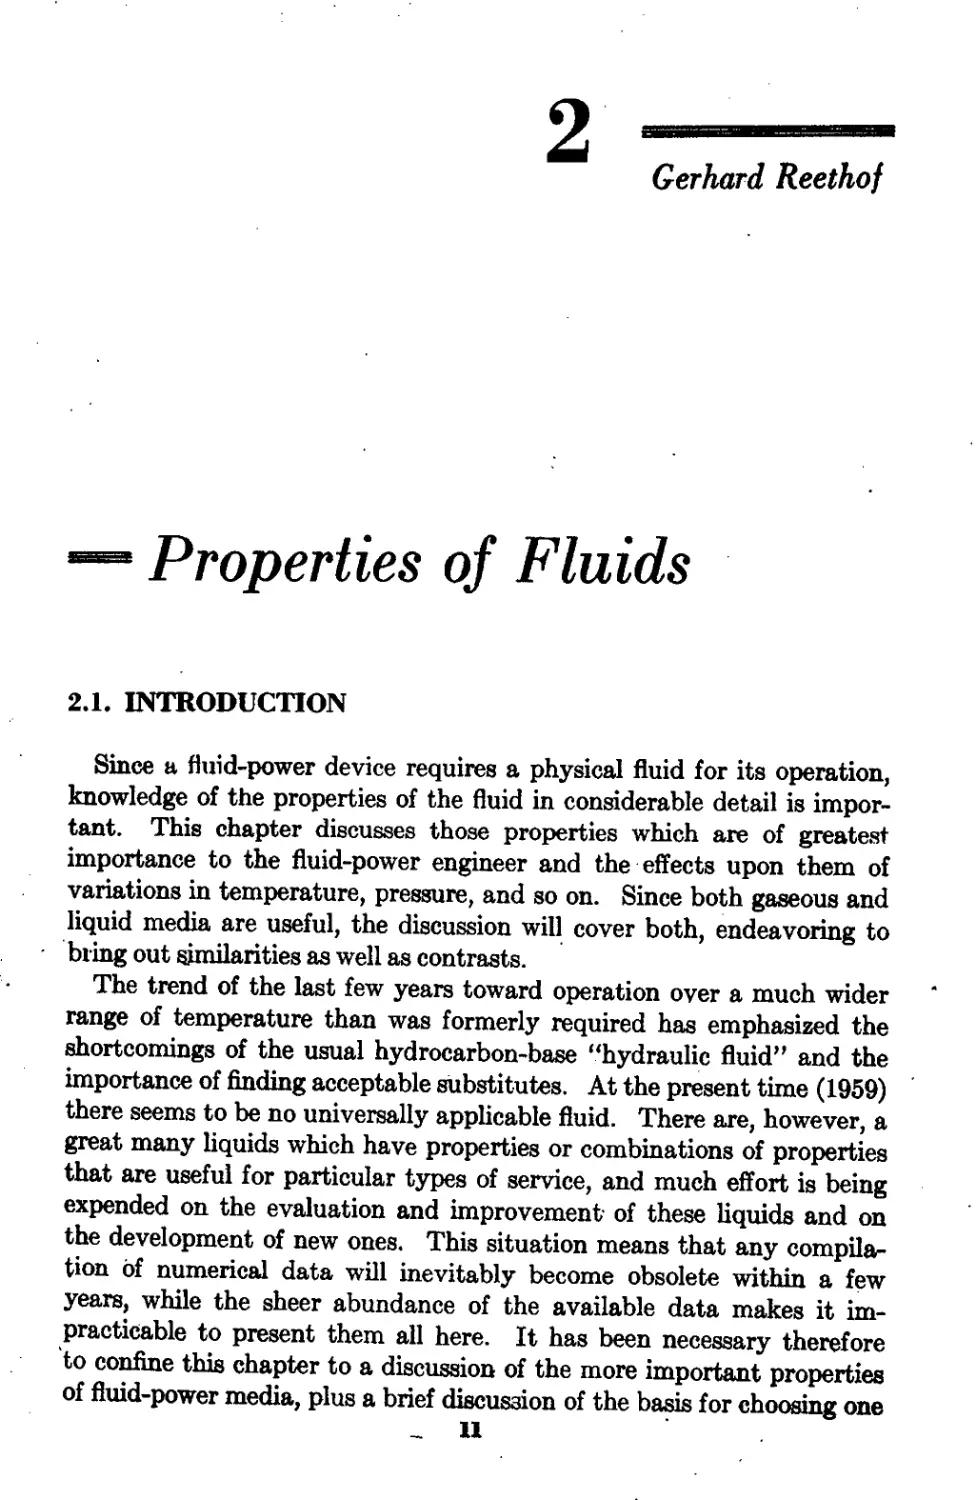 Chapter 2 Properties of Fluids: Gerhard Reethqf